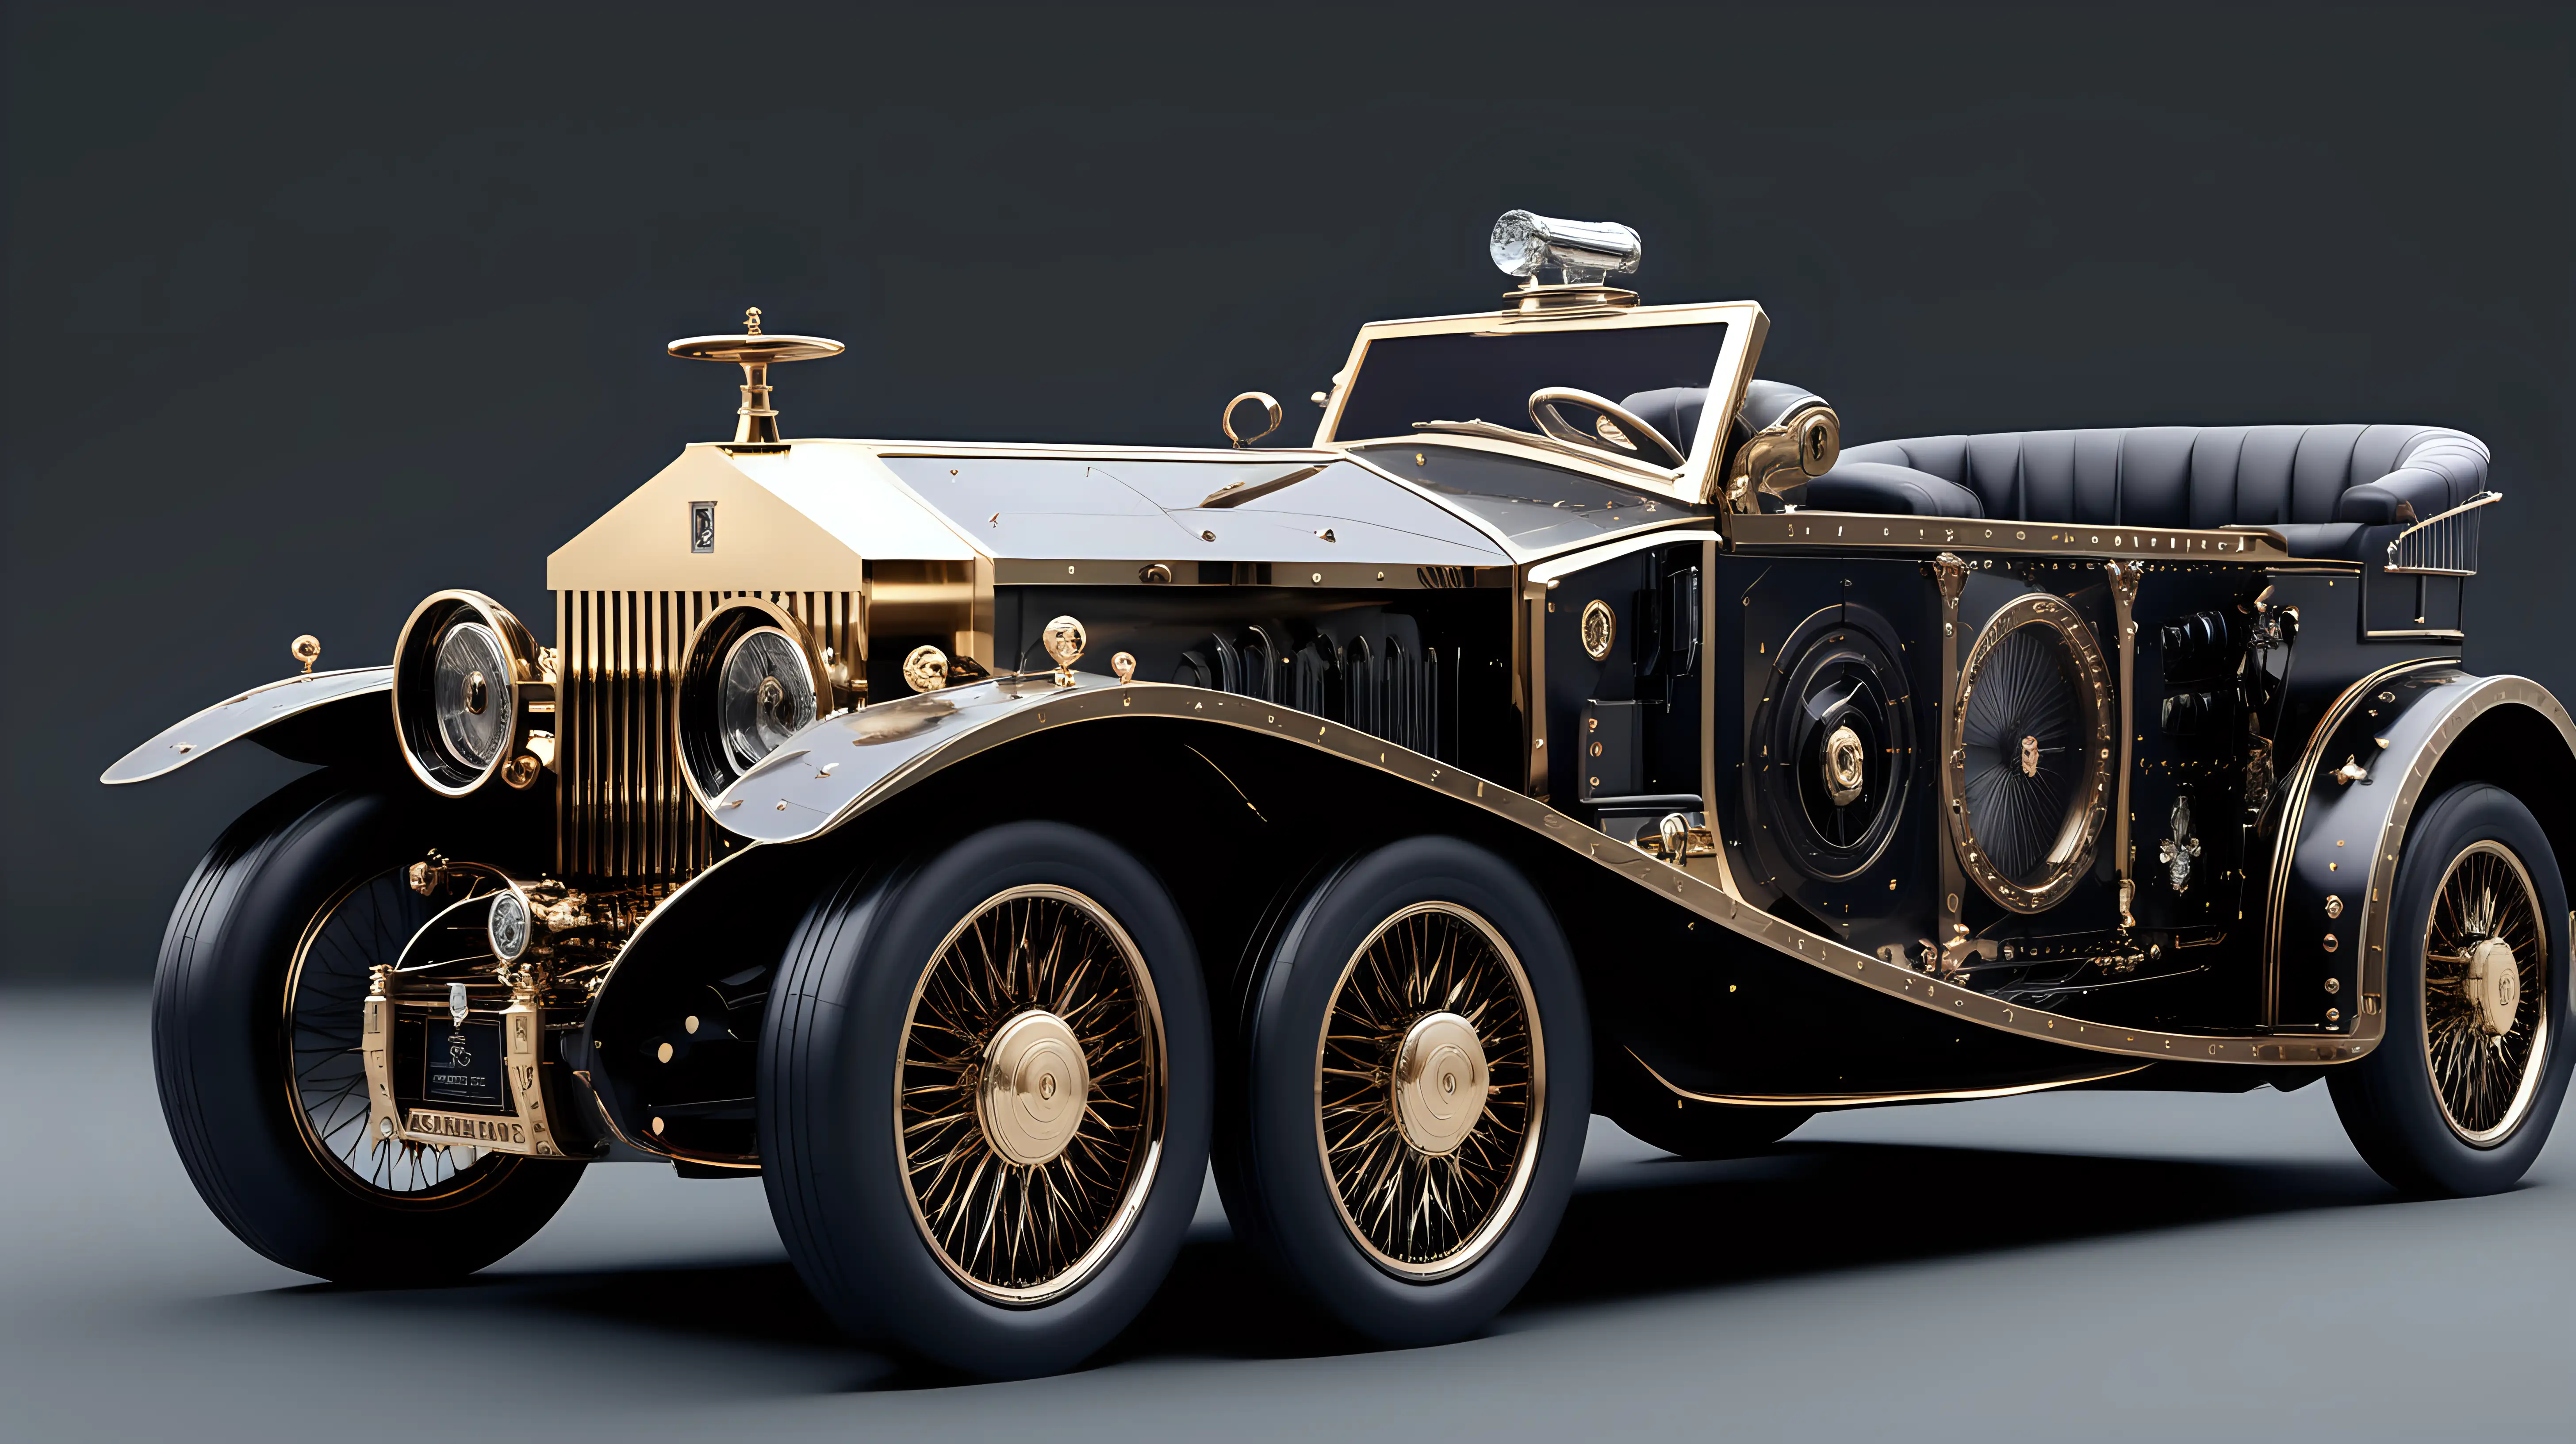 Steampunk Rolls Royce Adventure Retro Futuristic Journey in a Vintage Vehicle